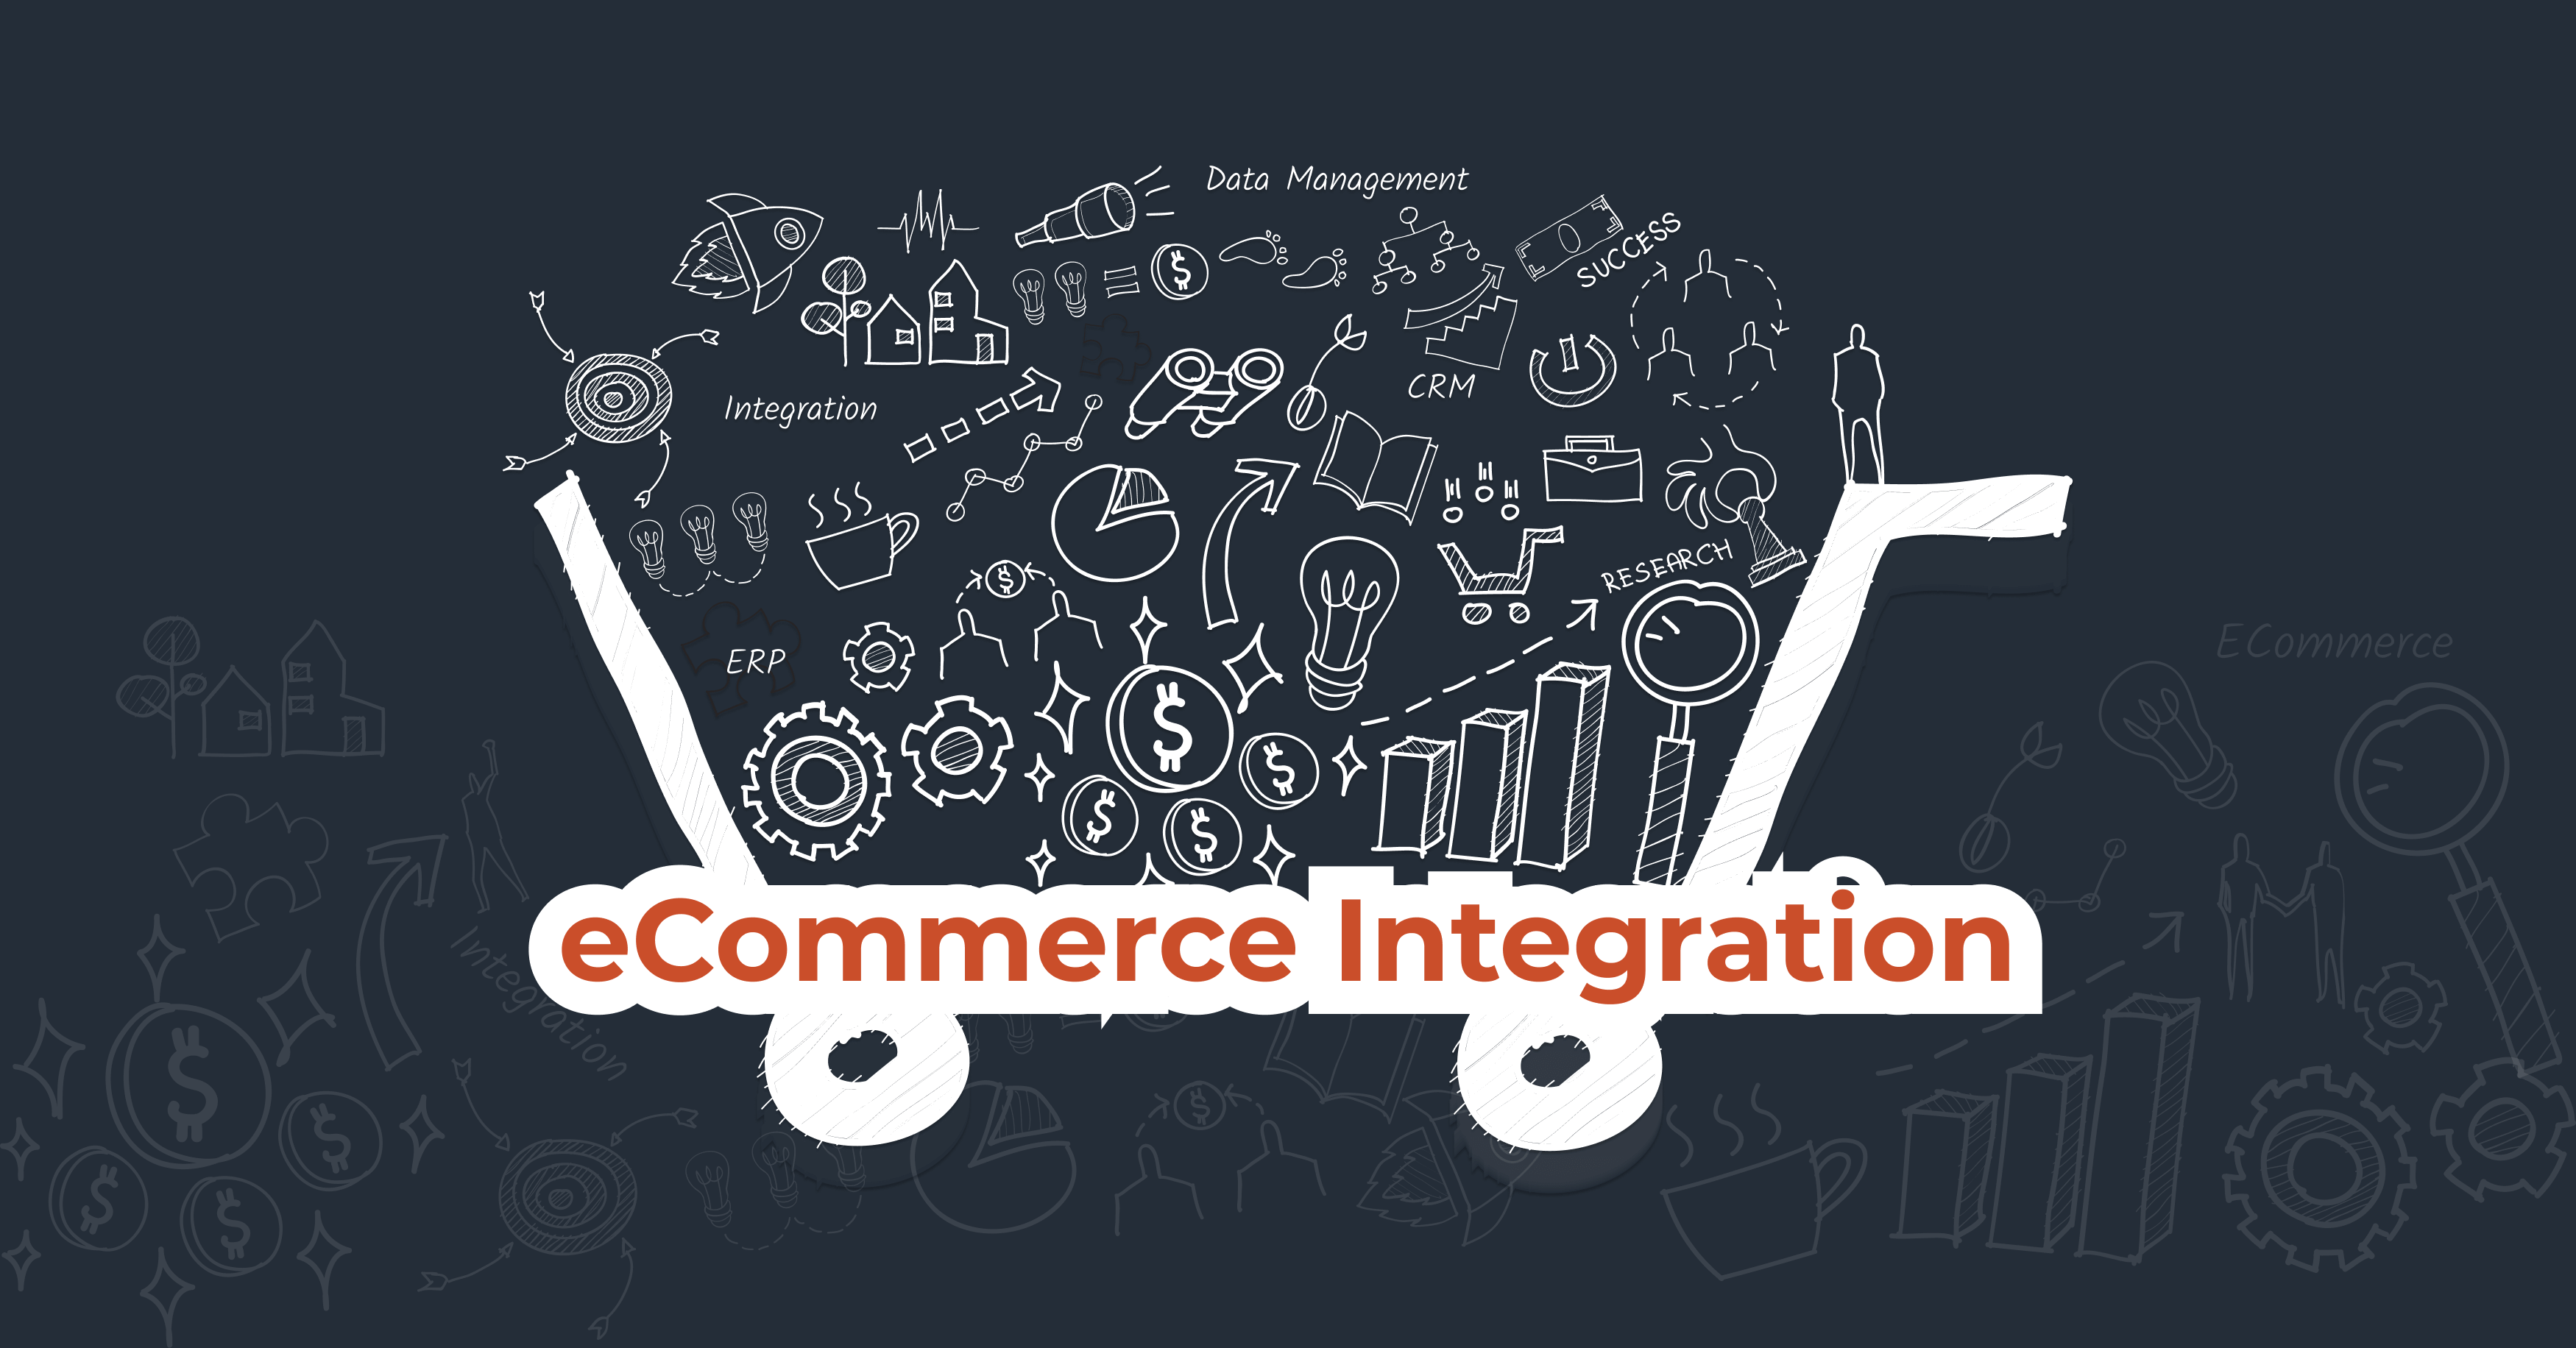 ecommerce integration